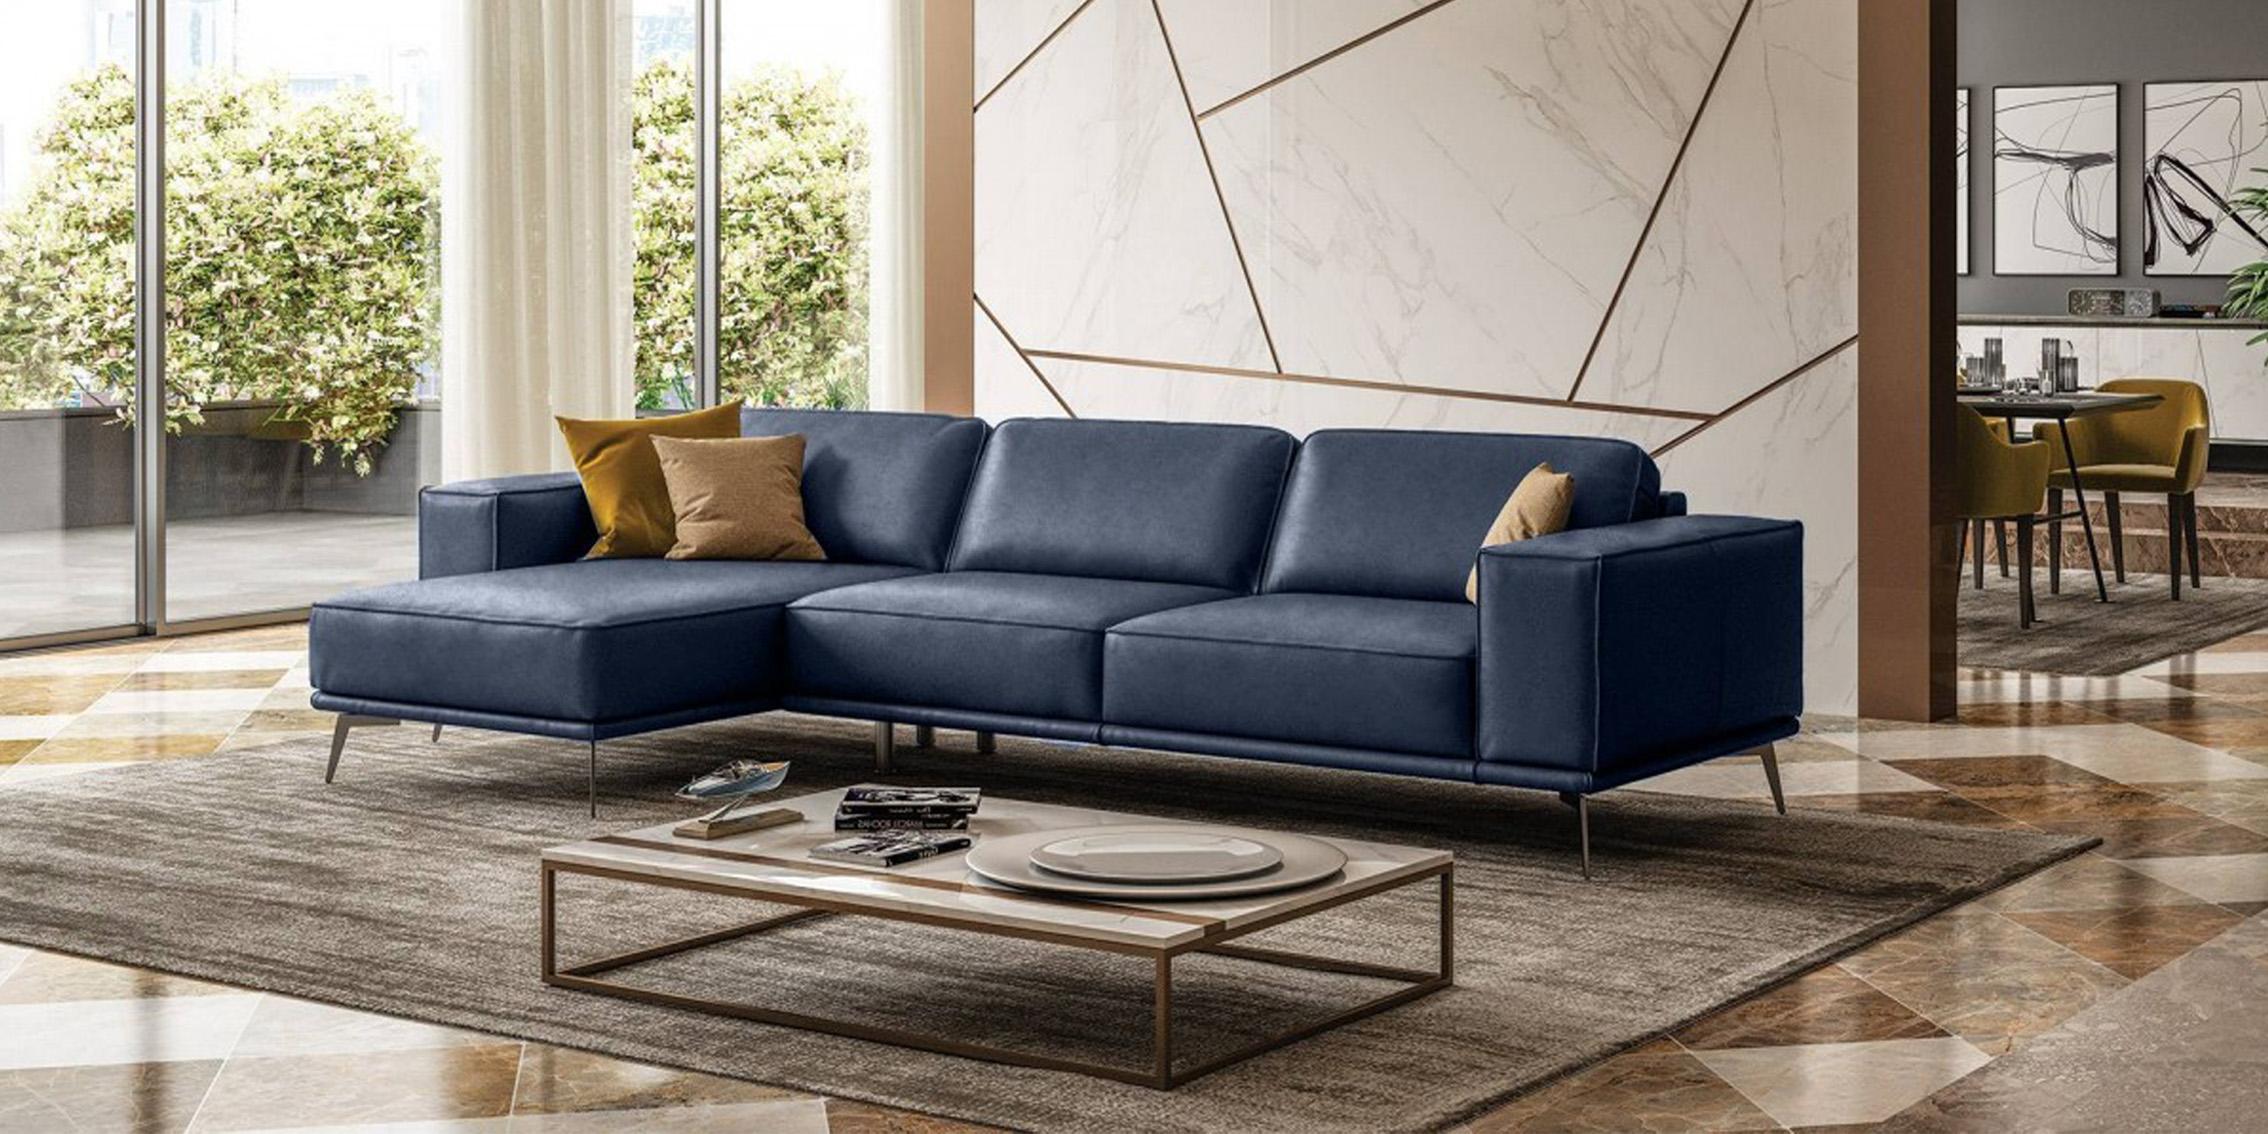 Contemporary, Modern Sectional Sofa VGCCSOHO-LAF-BLUE-SECT VGCCSOHO-LAF-BLUE-SECT in Blue Italian Leather